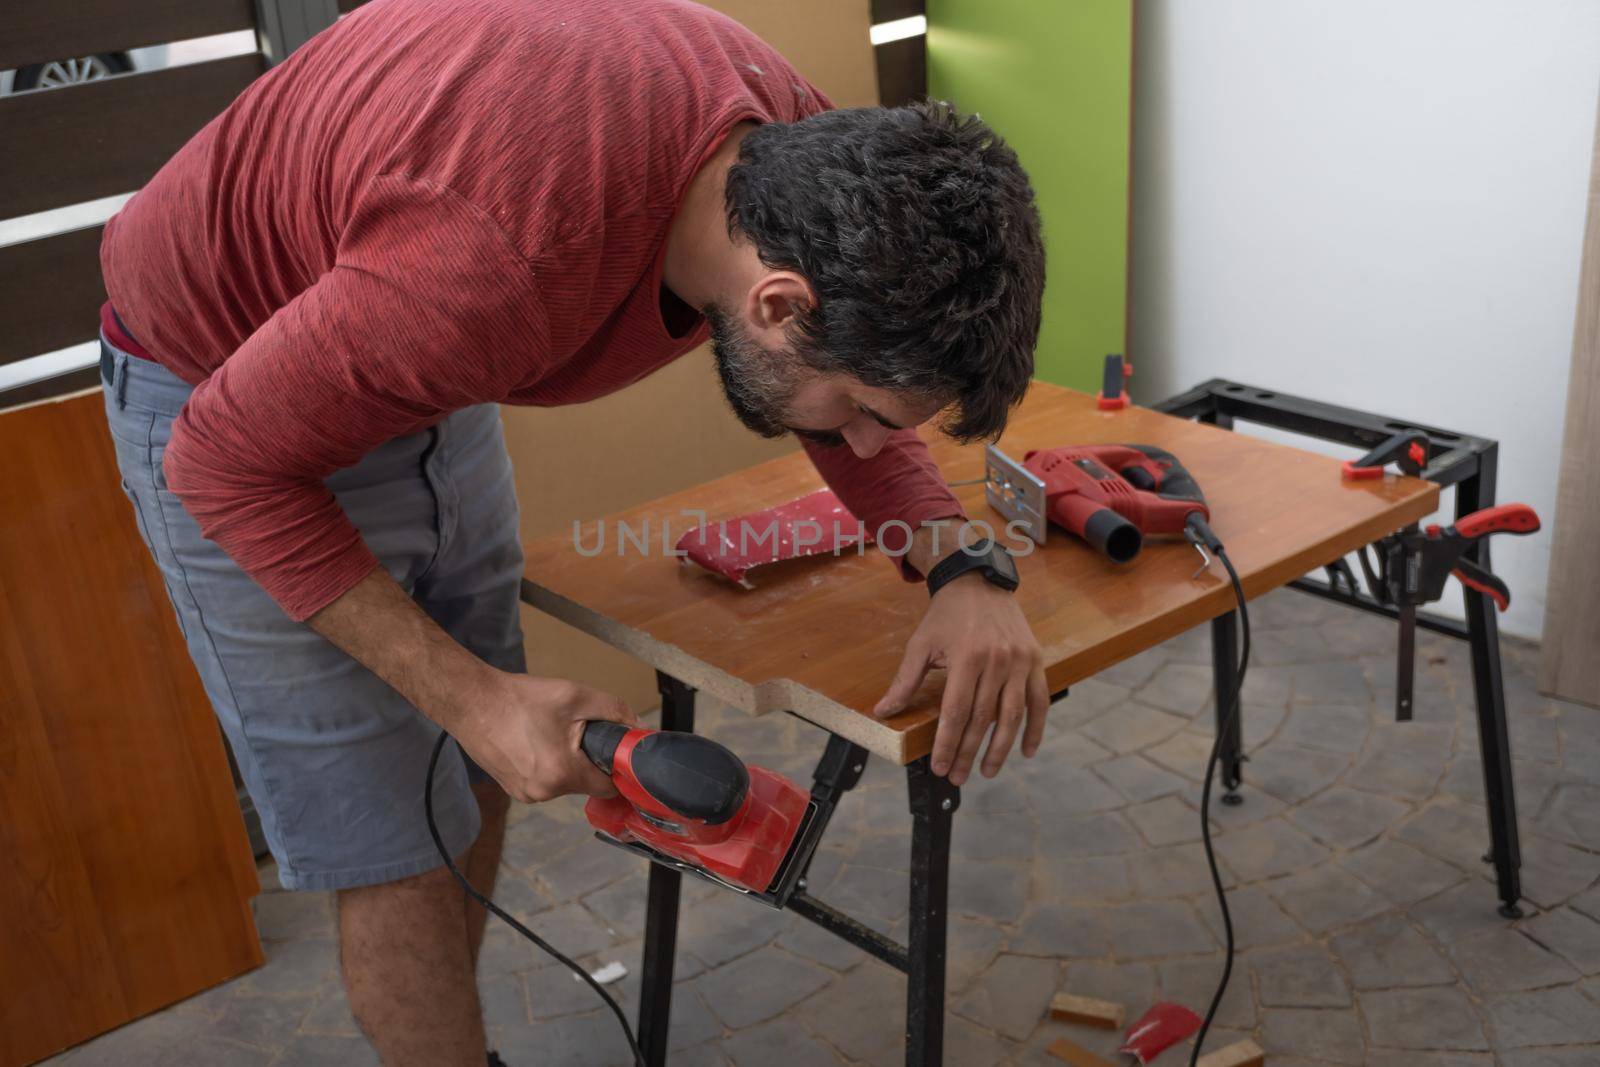 man using power tools by joseantona